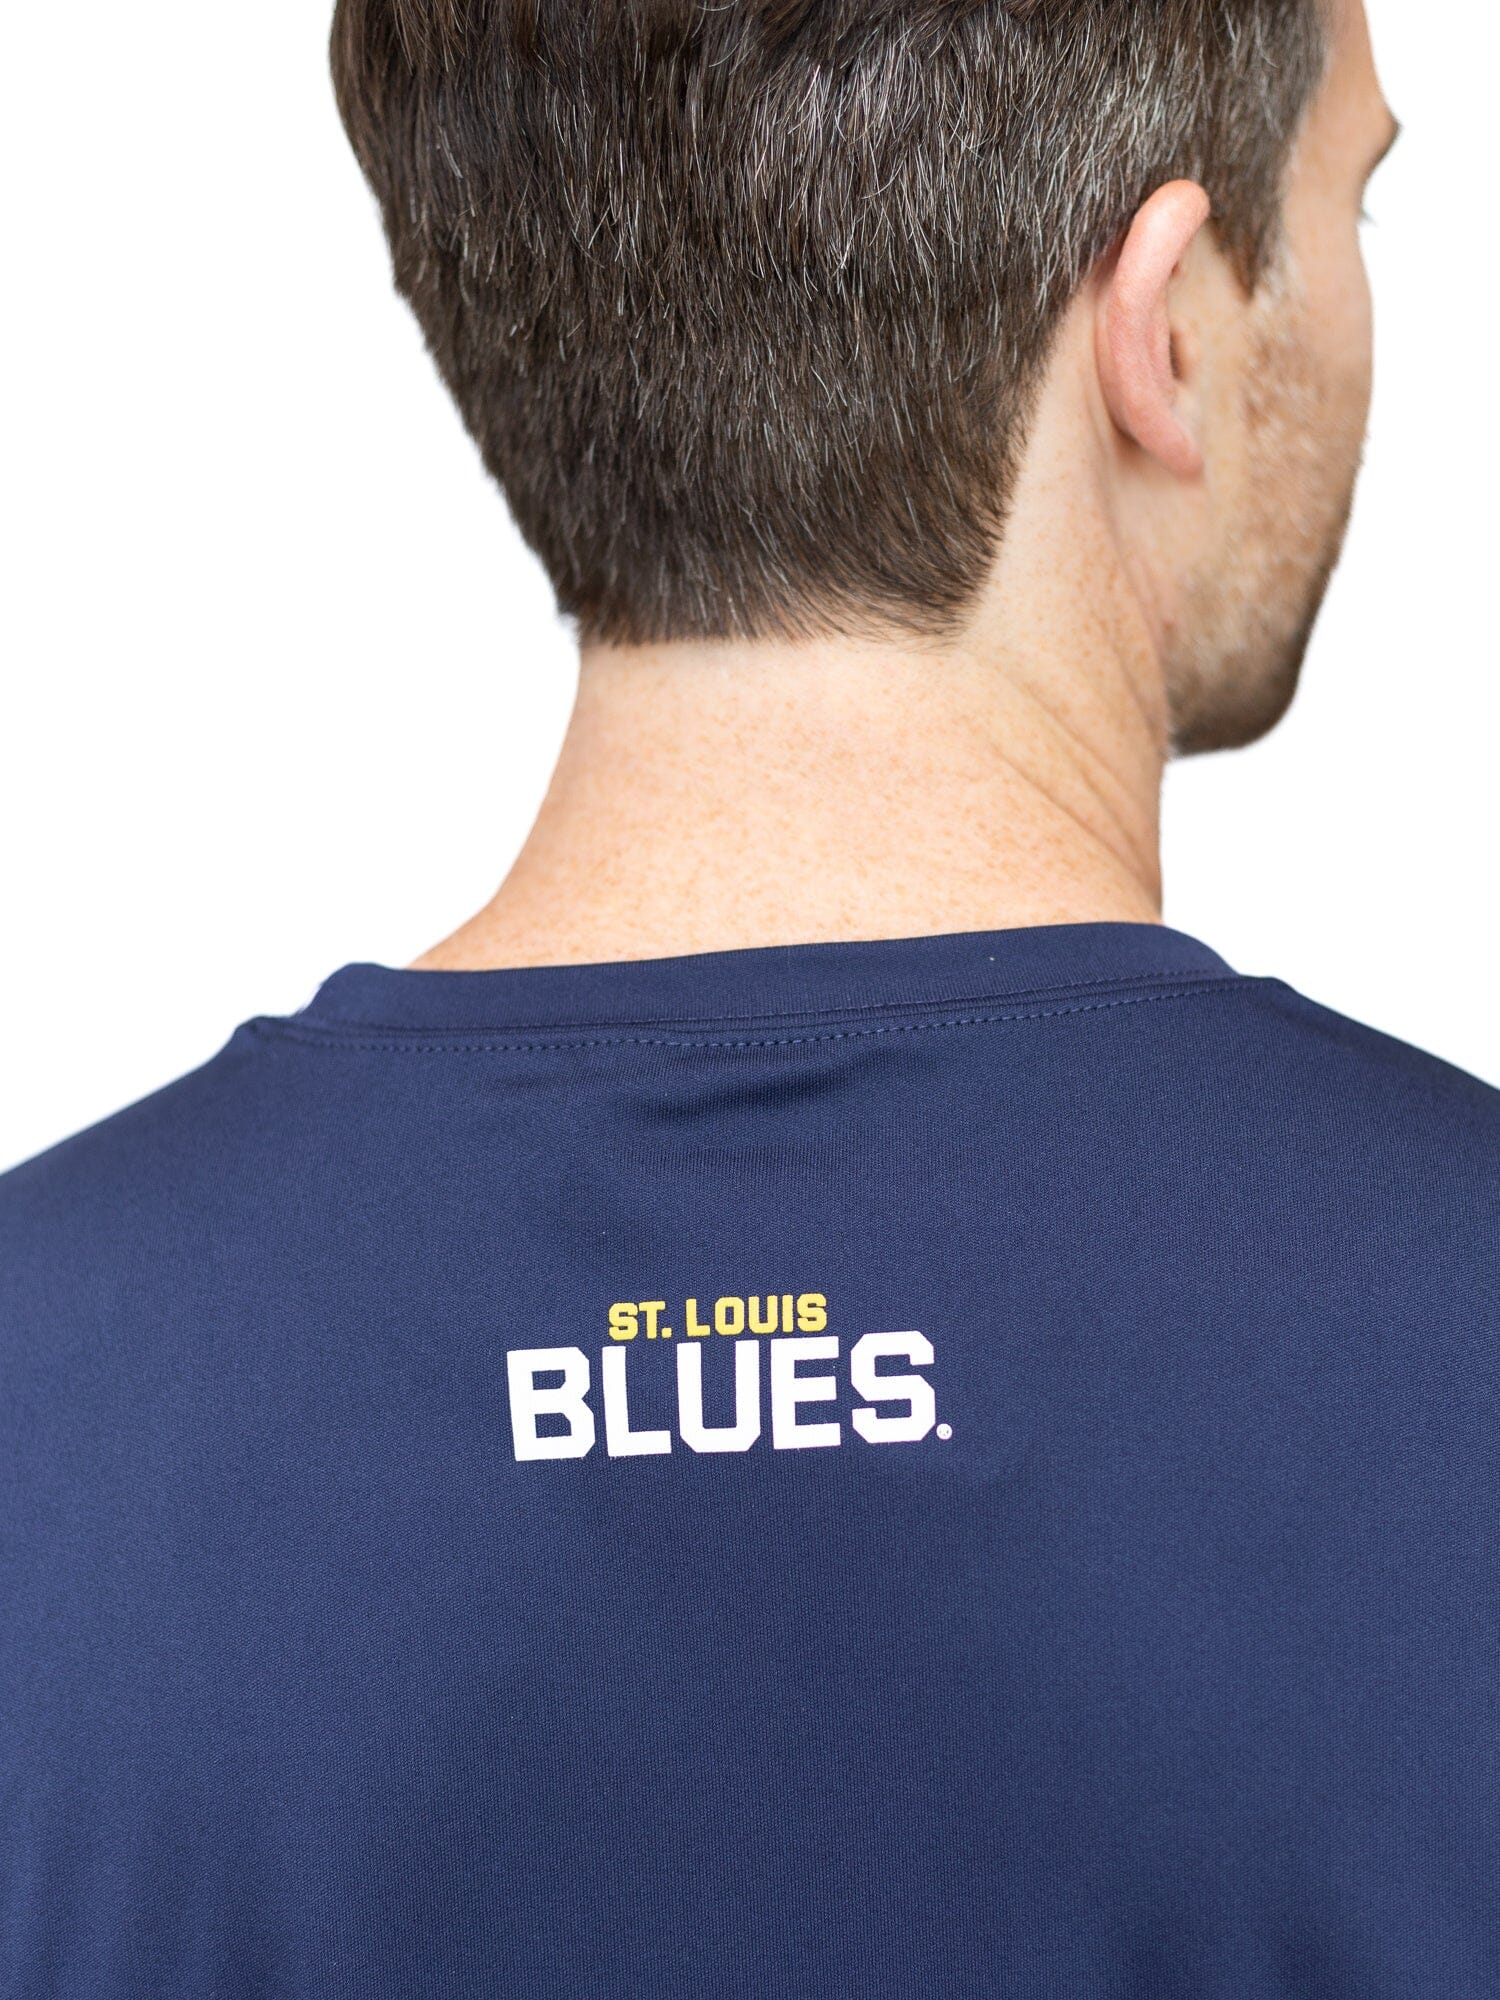 St. Louis Blues "Full Fandom" Moisture Wicking T-Shirt - Back Logo